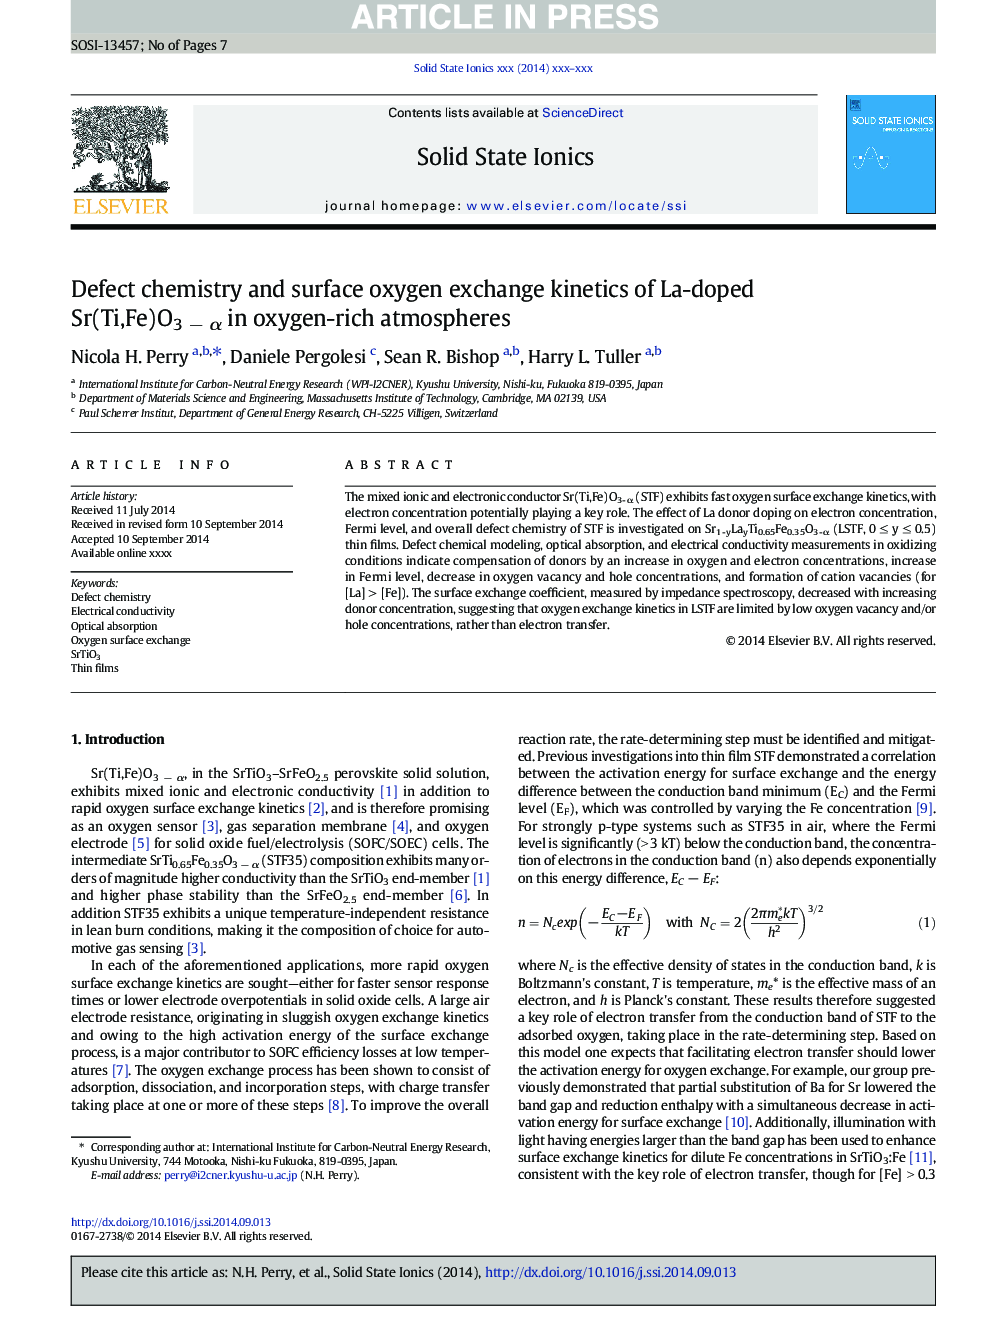 Defect chemistry and surface oxygen exchange kinetics of La-doped Sr(Ti,Fe)O3Â âÂ Î± in oxygen-rich atmospheres